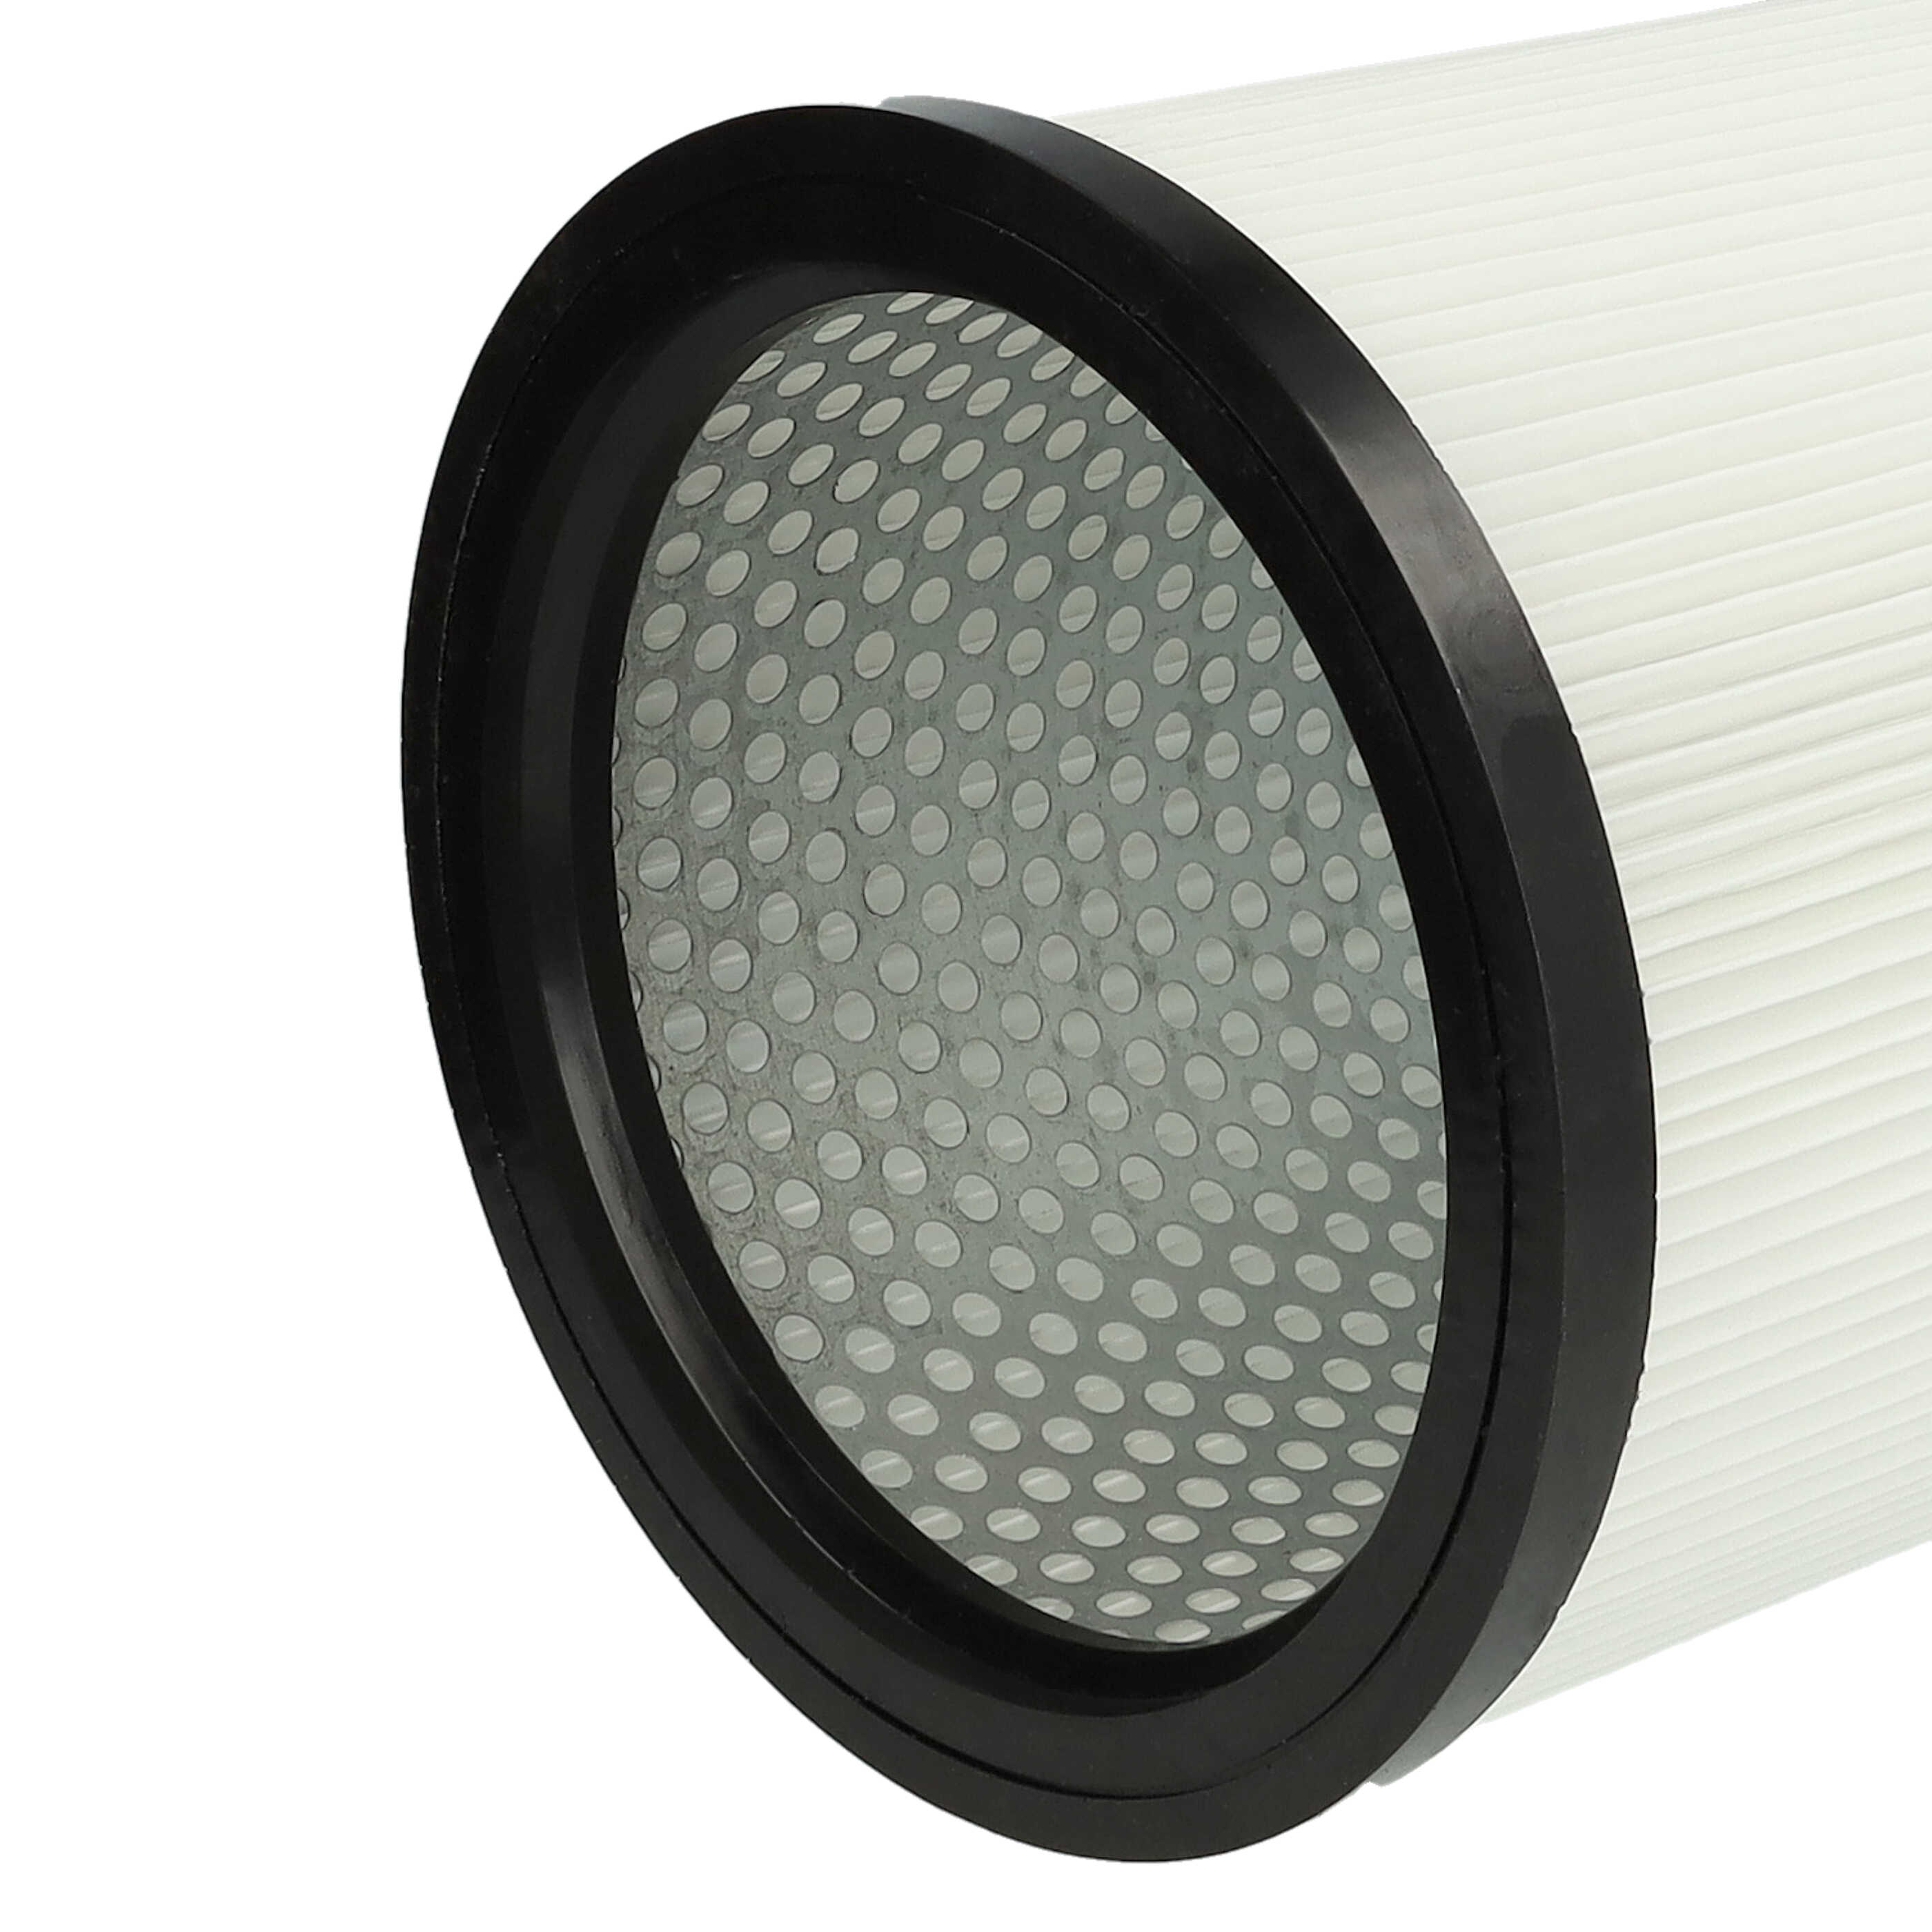 1x cartridge filter replaces Kärcher 9.770-988.0, 6.907-038.0 for KärcherVacuum Cleaner, white